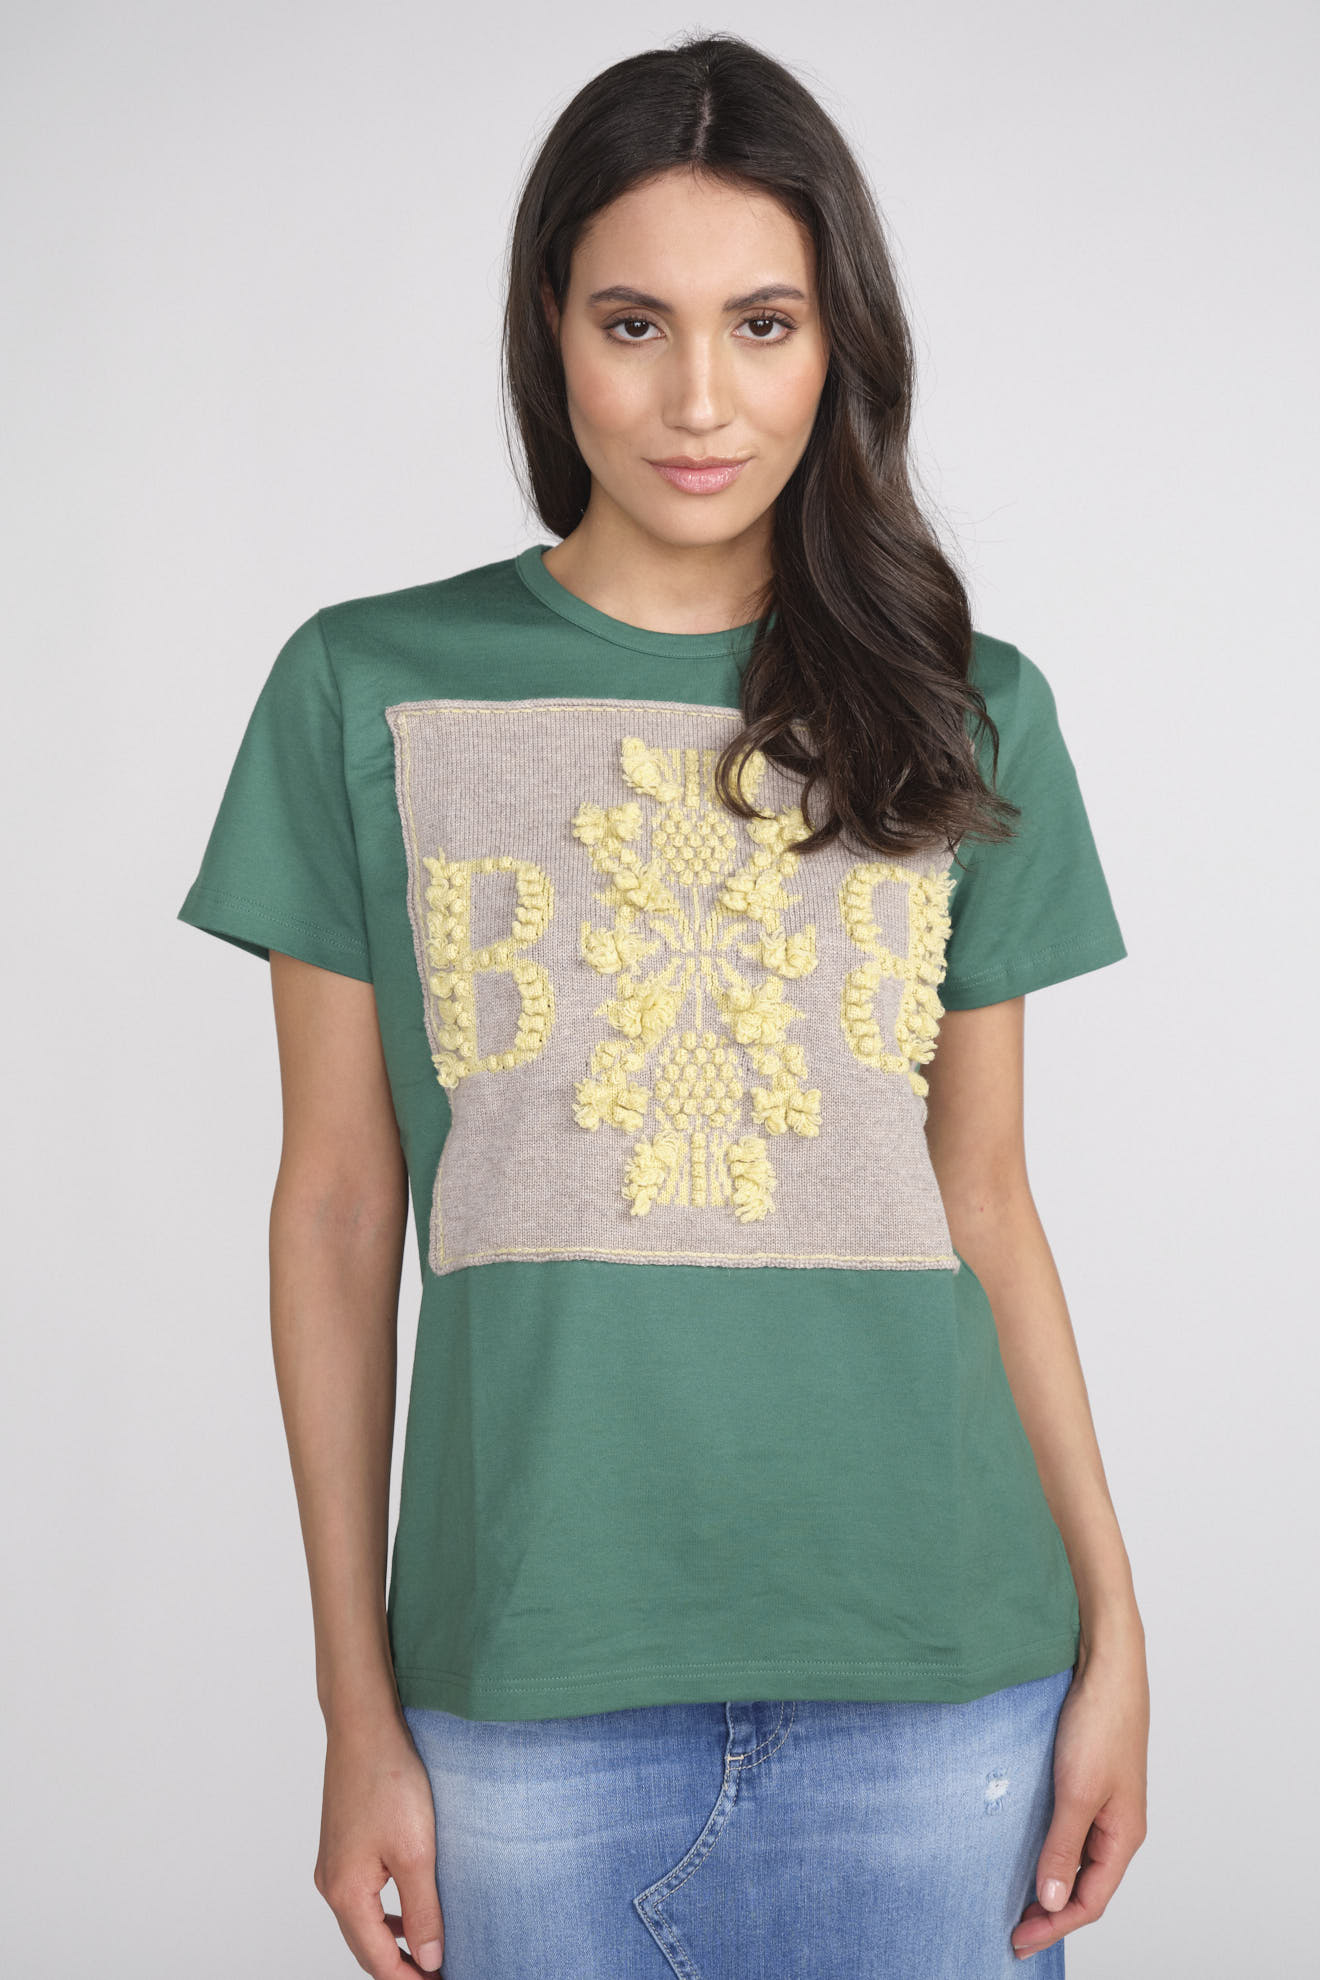 Barrie Cotton T-Shirt with logo cashmere patch – T-Shirt mit Logoaufnäher aus Cashmere Farbe: taupe Größe: M taupe M